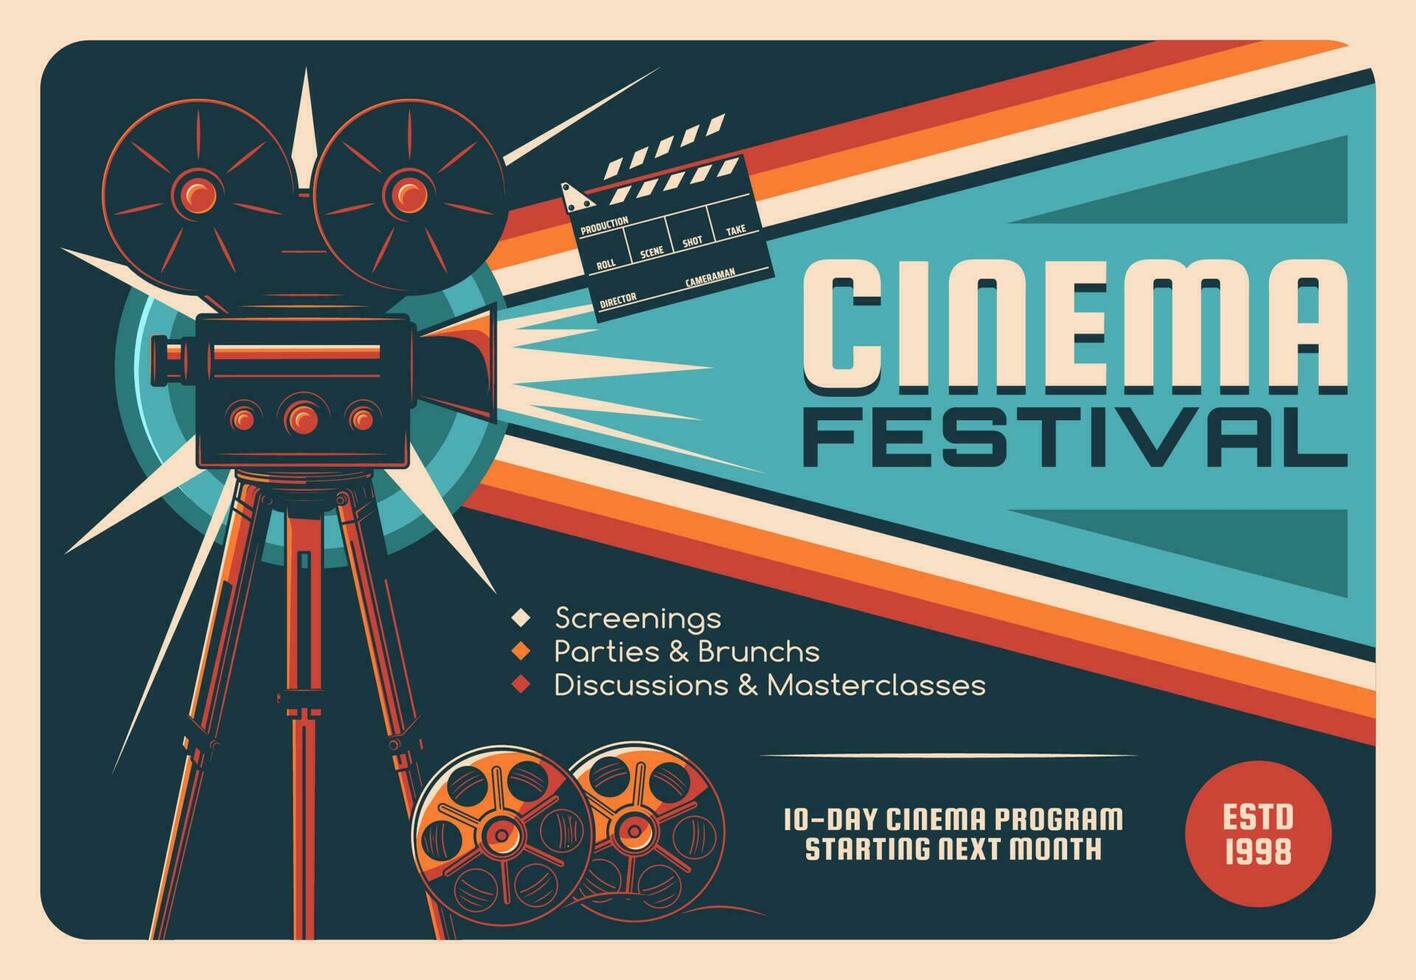 Kino Festival, Kinematographie Veranstaltung retro Poster vektor